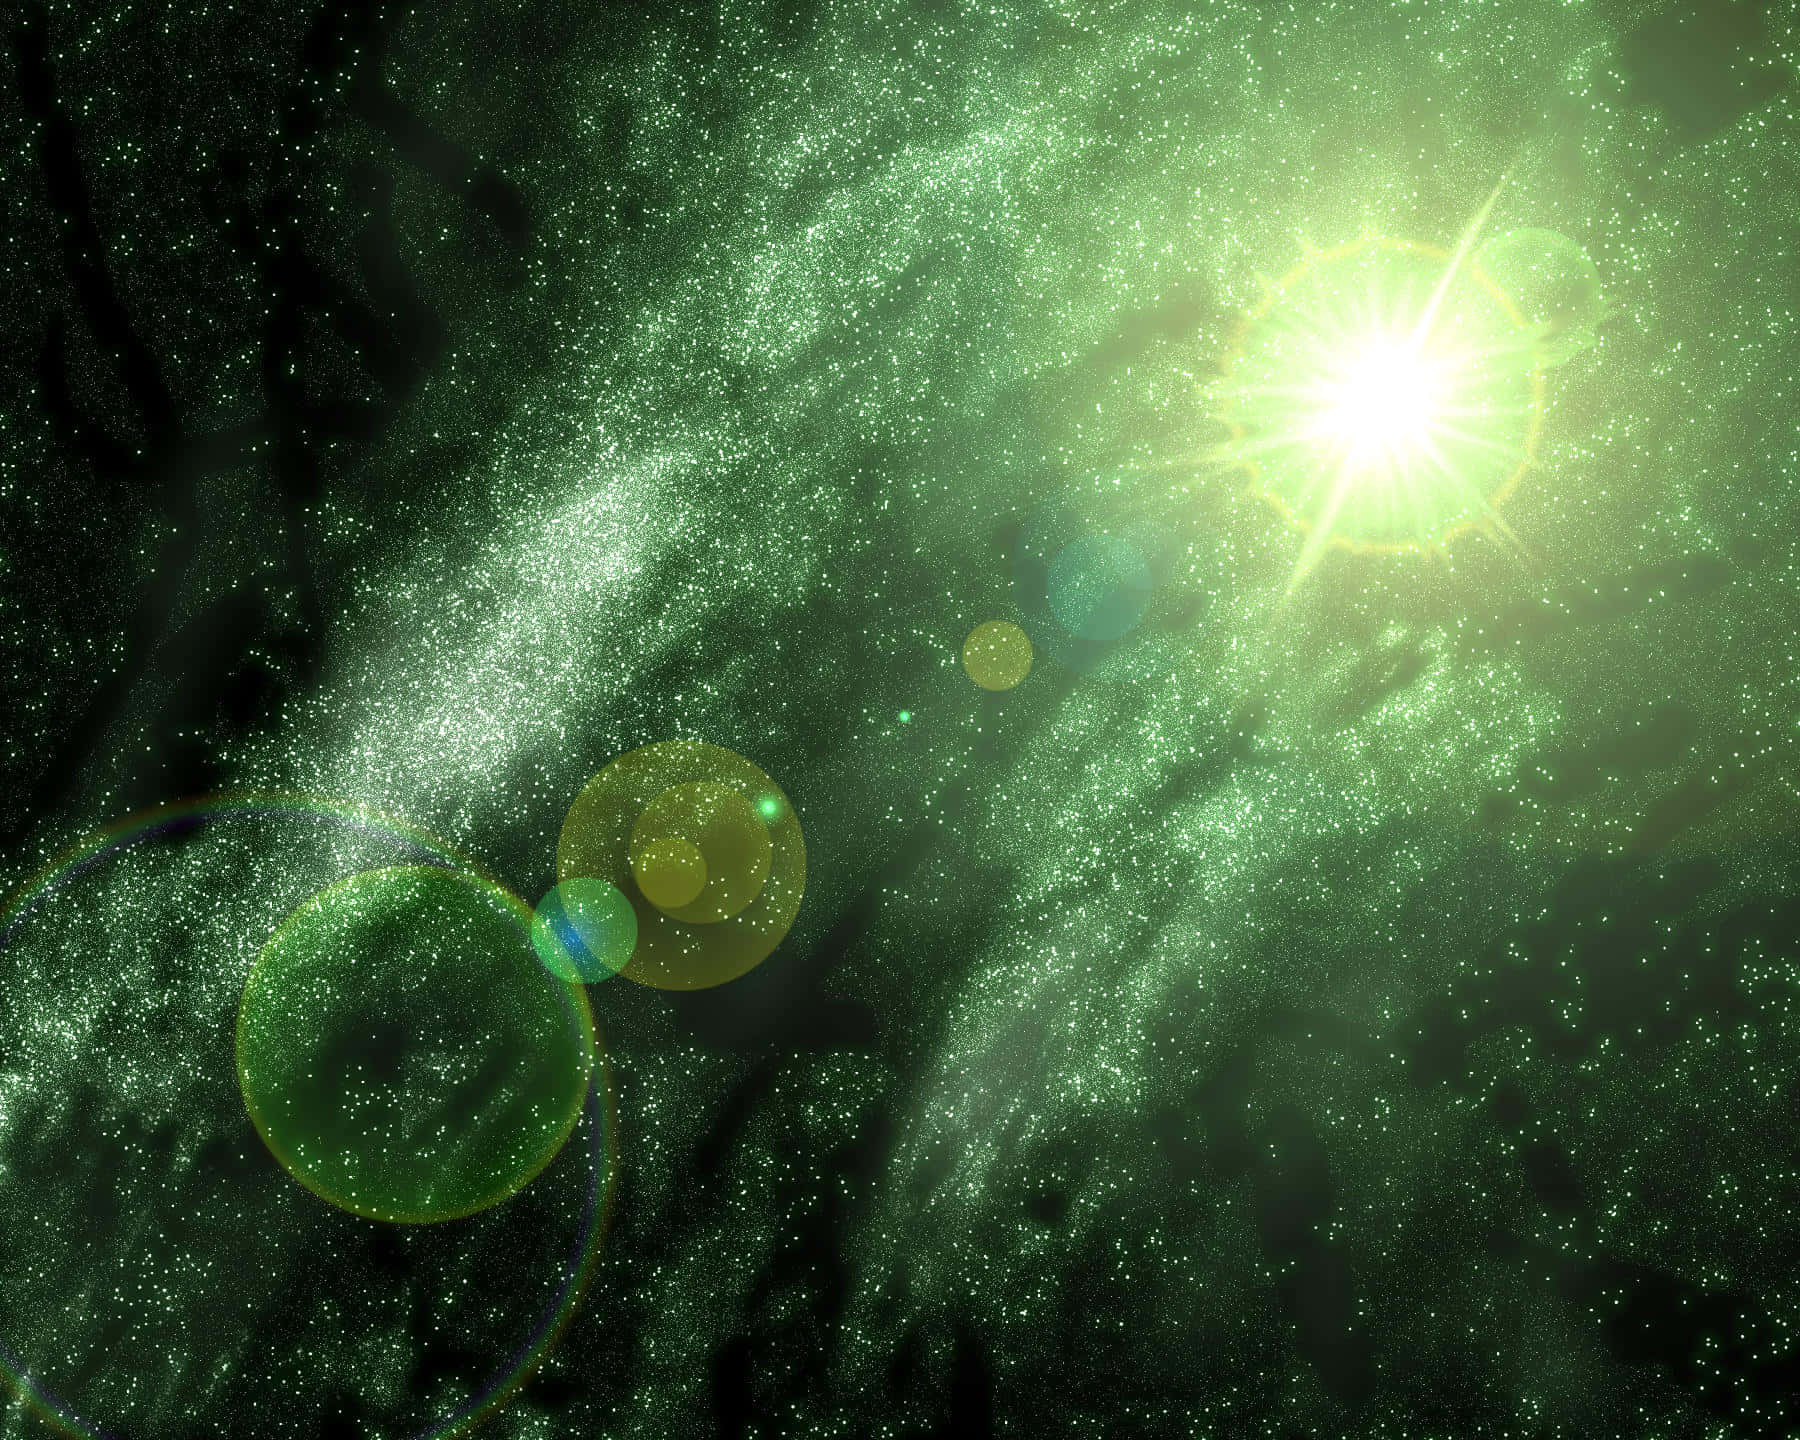 Stunning Green Galaxy in Deep Space